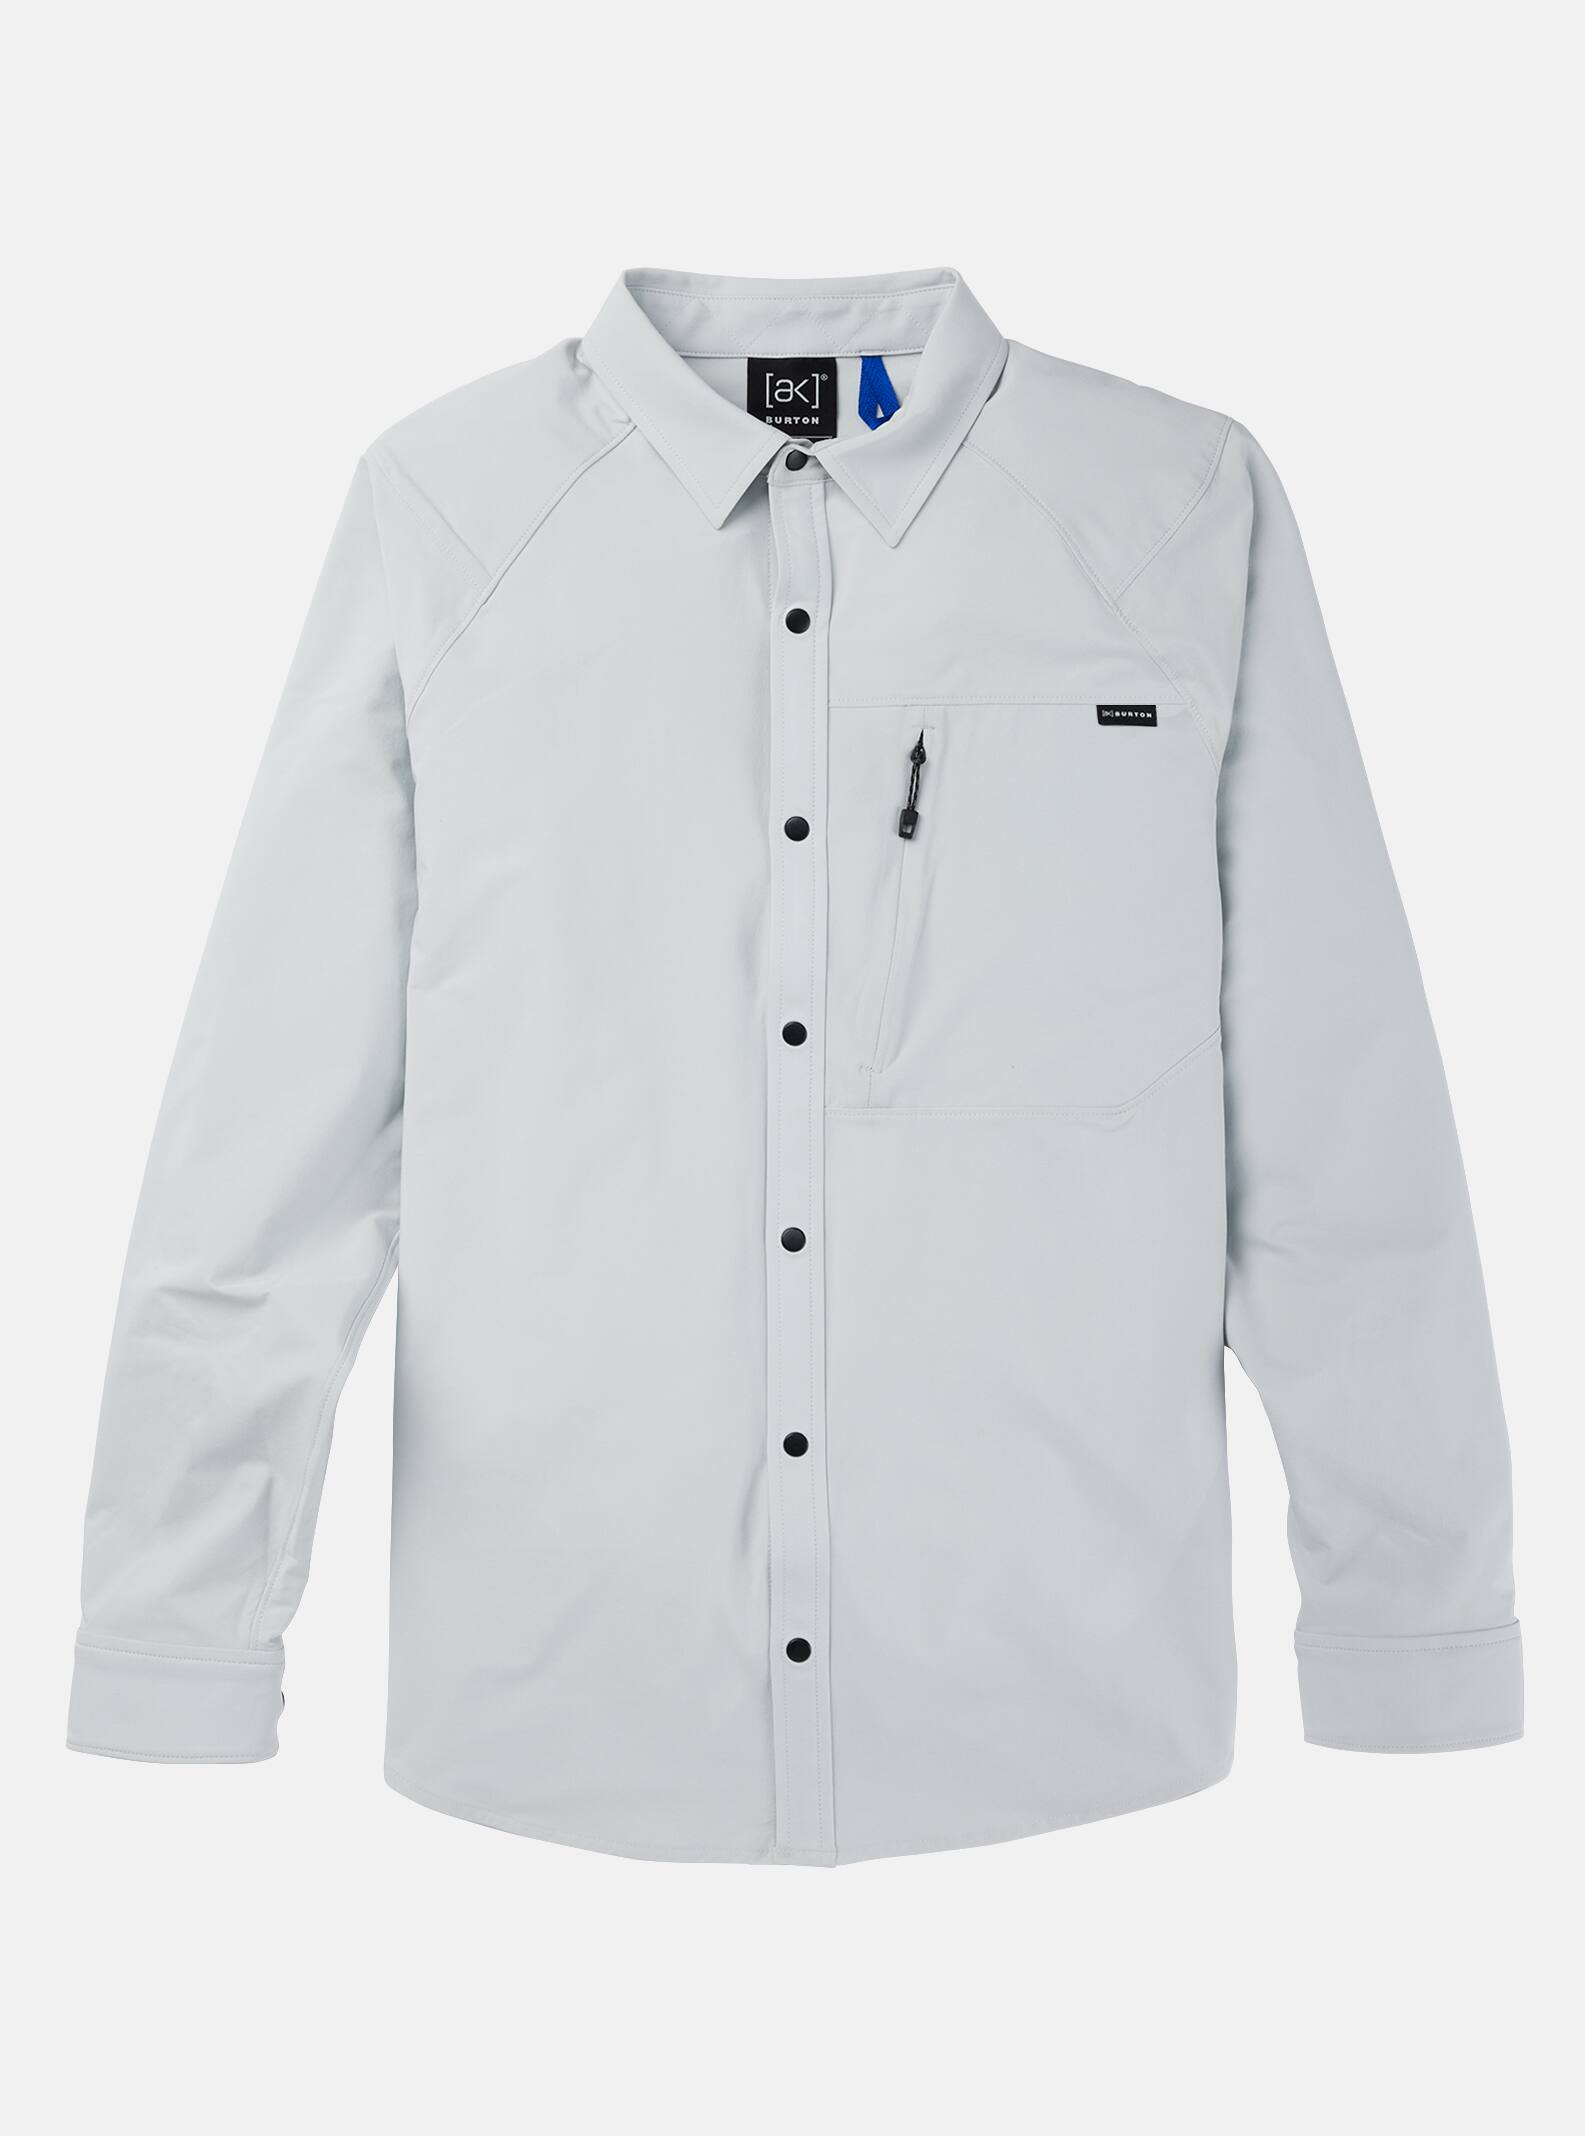 Burton Men's [ak] Slats Long Sleeve Shirt, S